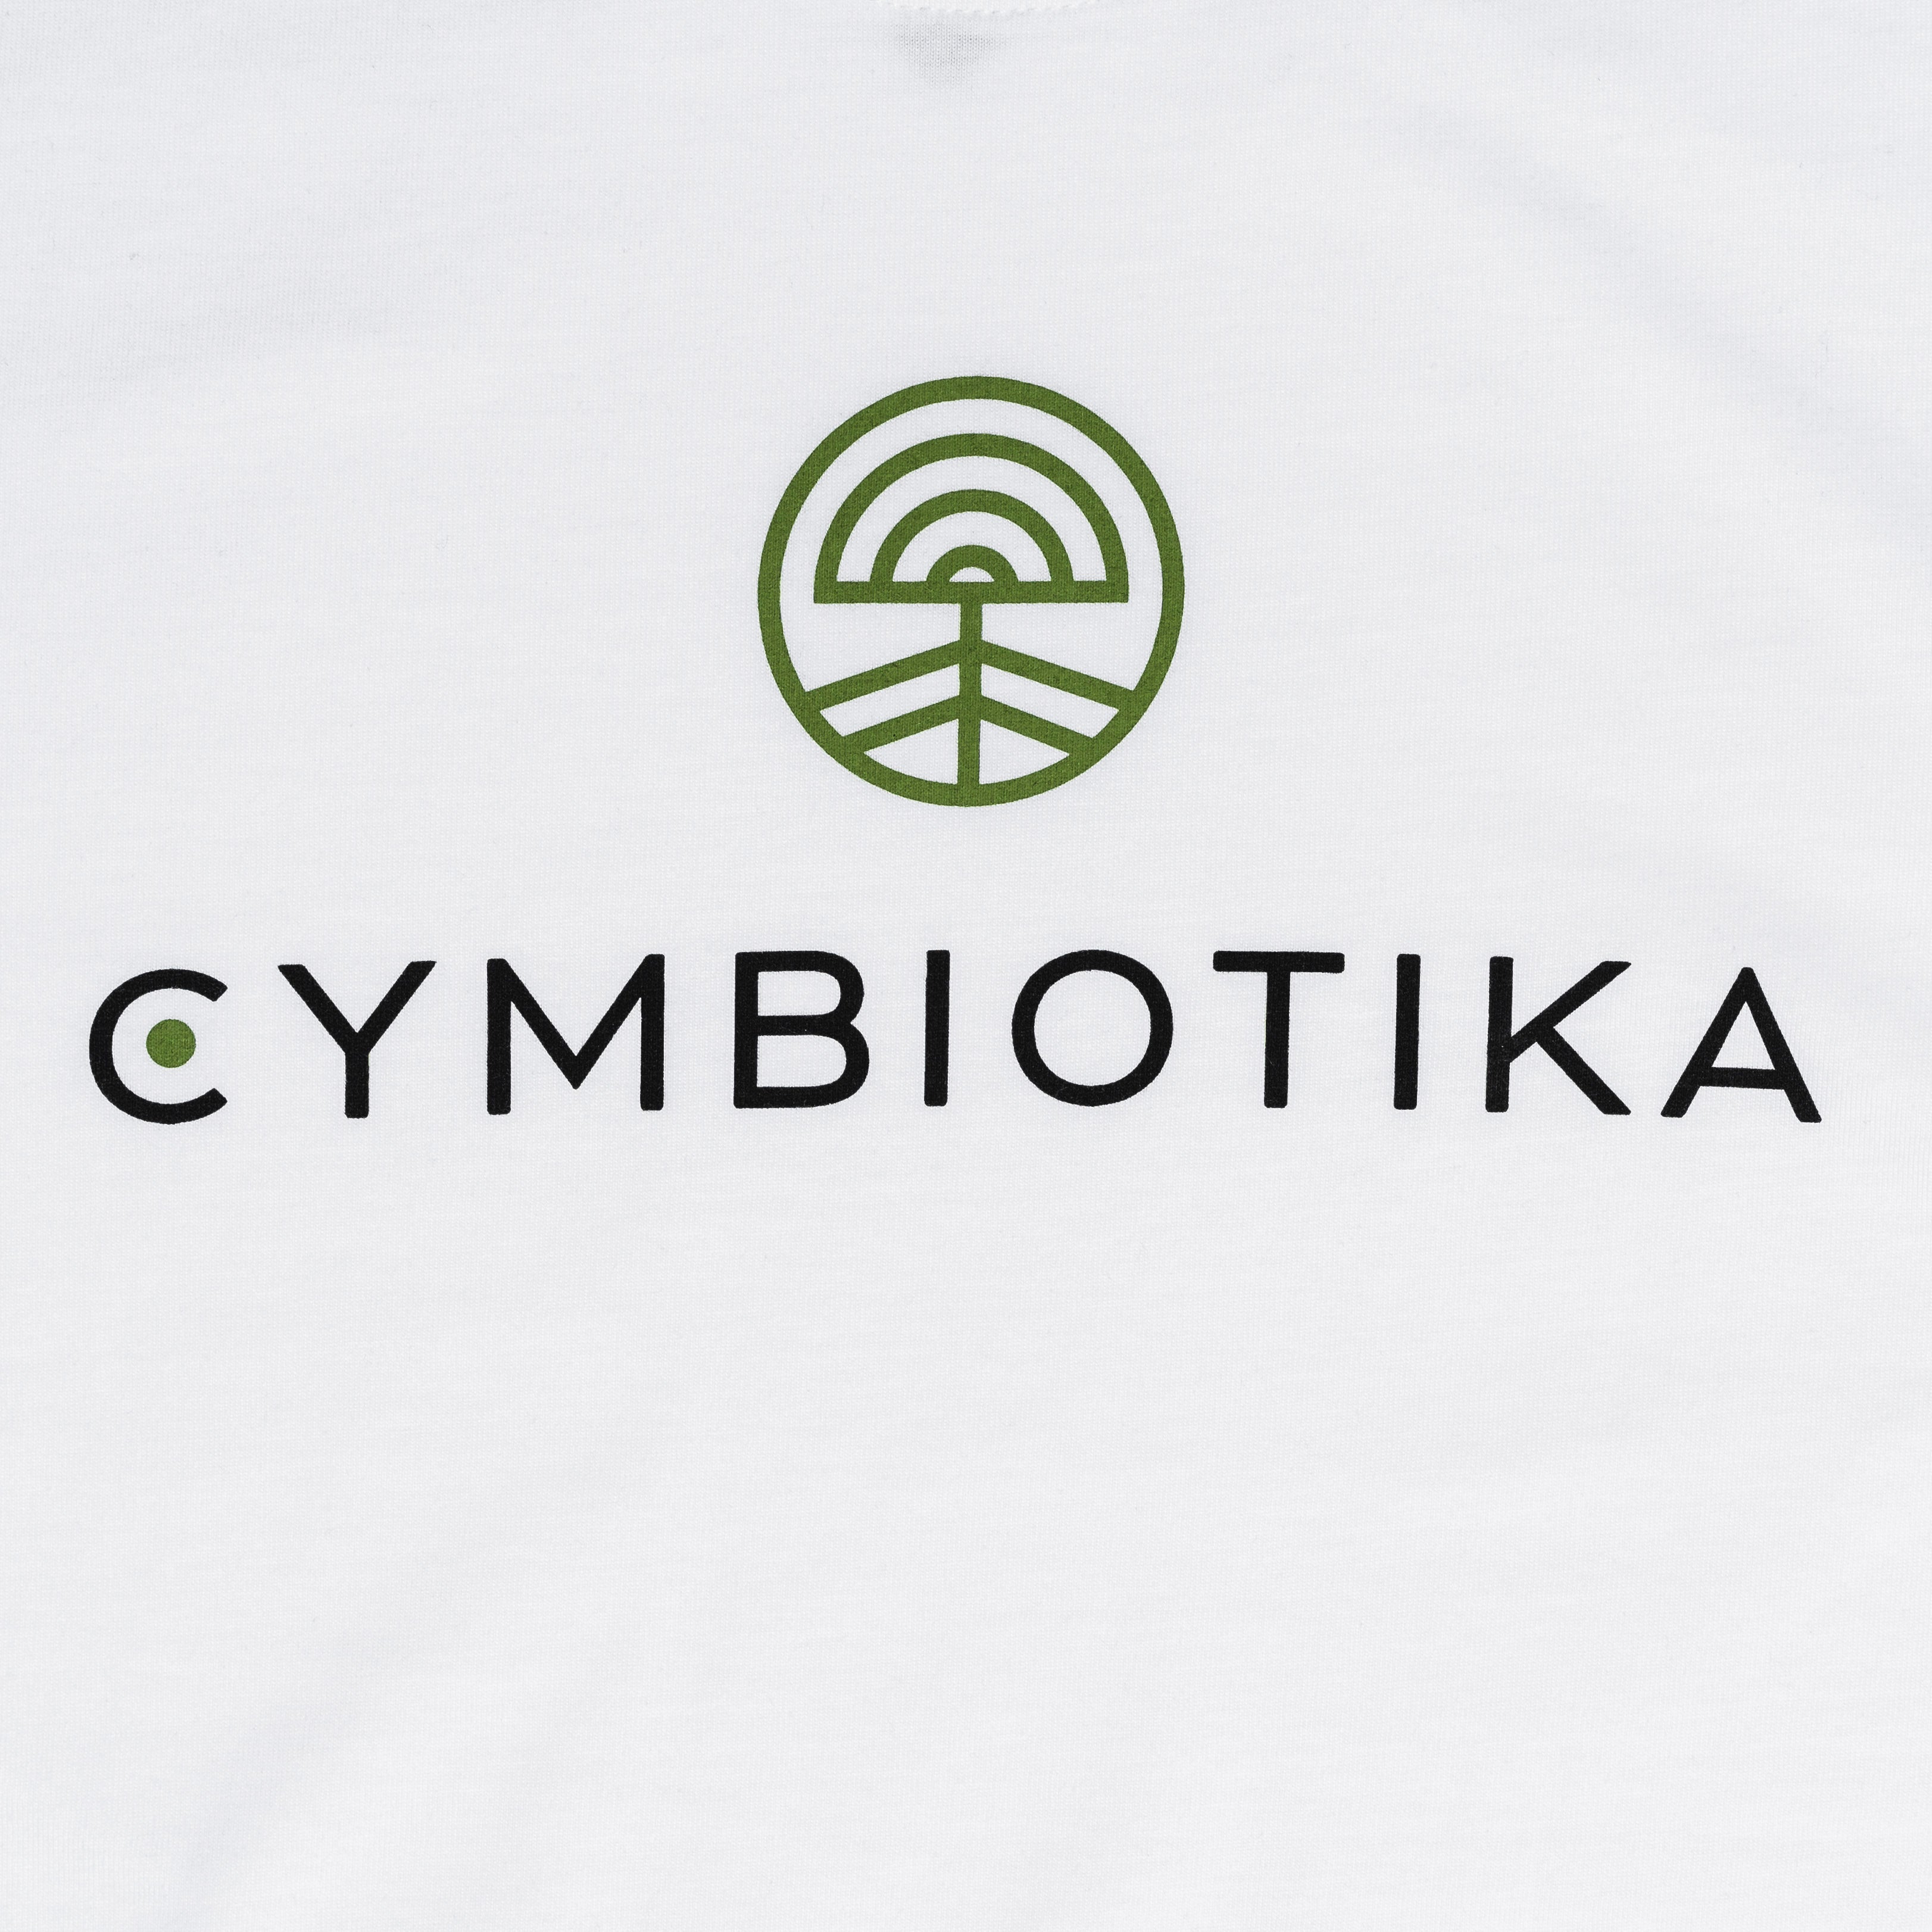 Cymbiotika Premium Branded T-Shirt White Zoomed In